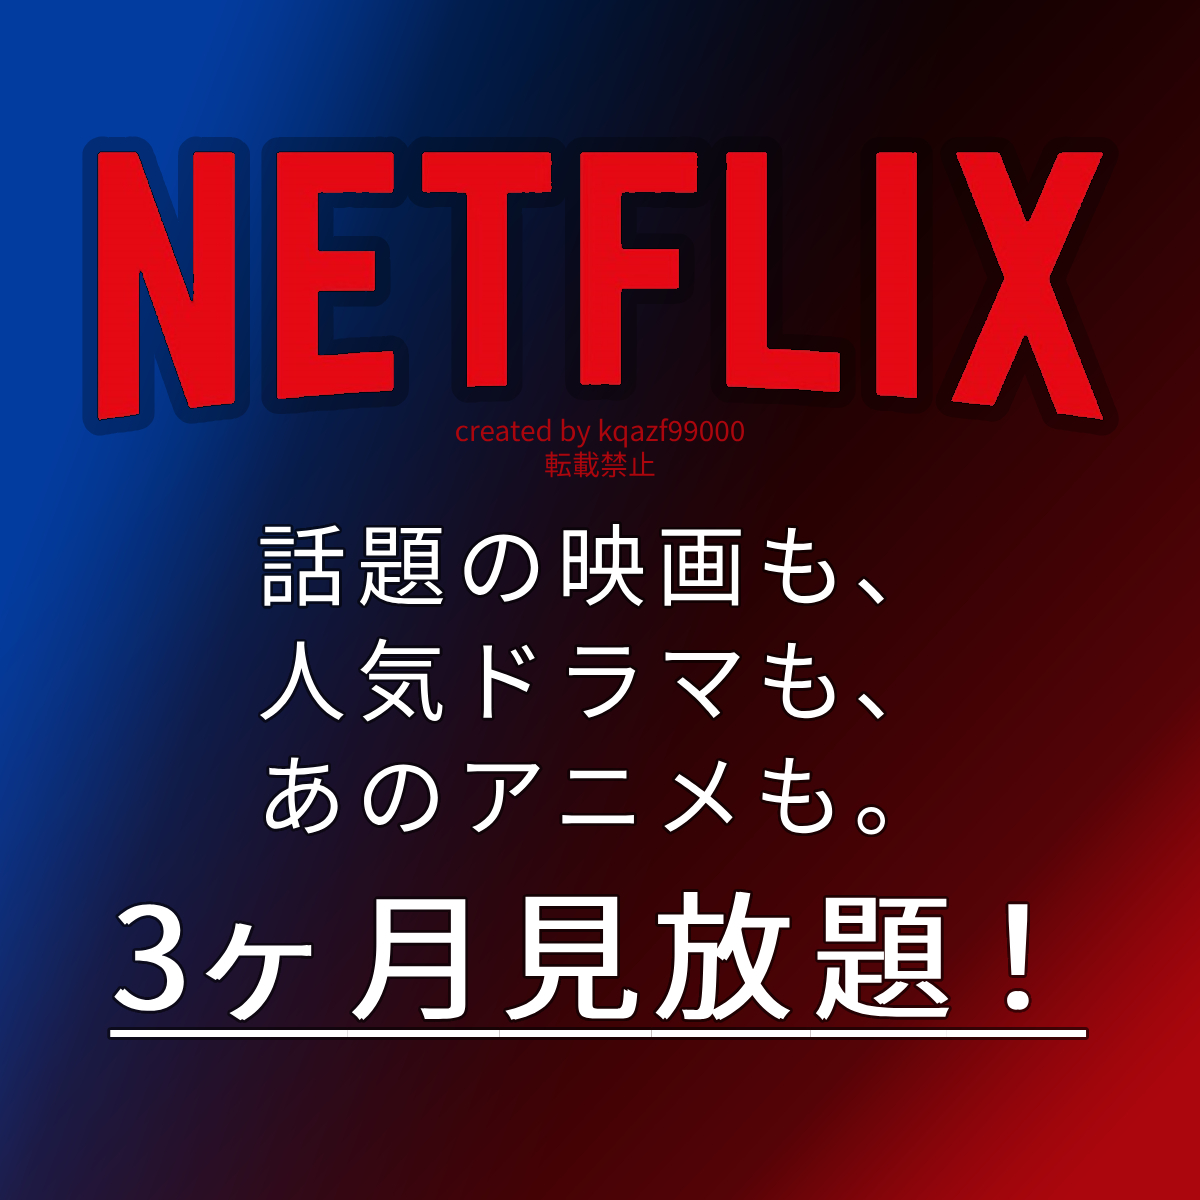 Netflix Premium 3ヶ月 スマートテレビ Fire stick tv Android IOS 4K UHD 対応 進撃の巨人 幽遊白書 キッズ ファミリー向け 韓流 作品有 _画像1